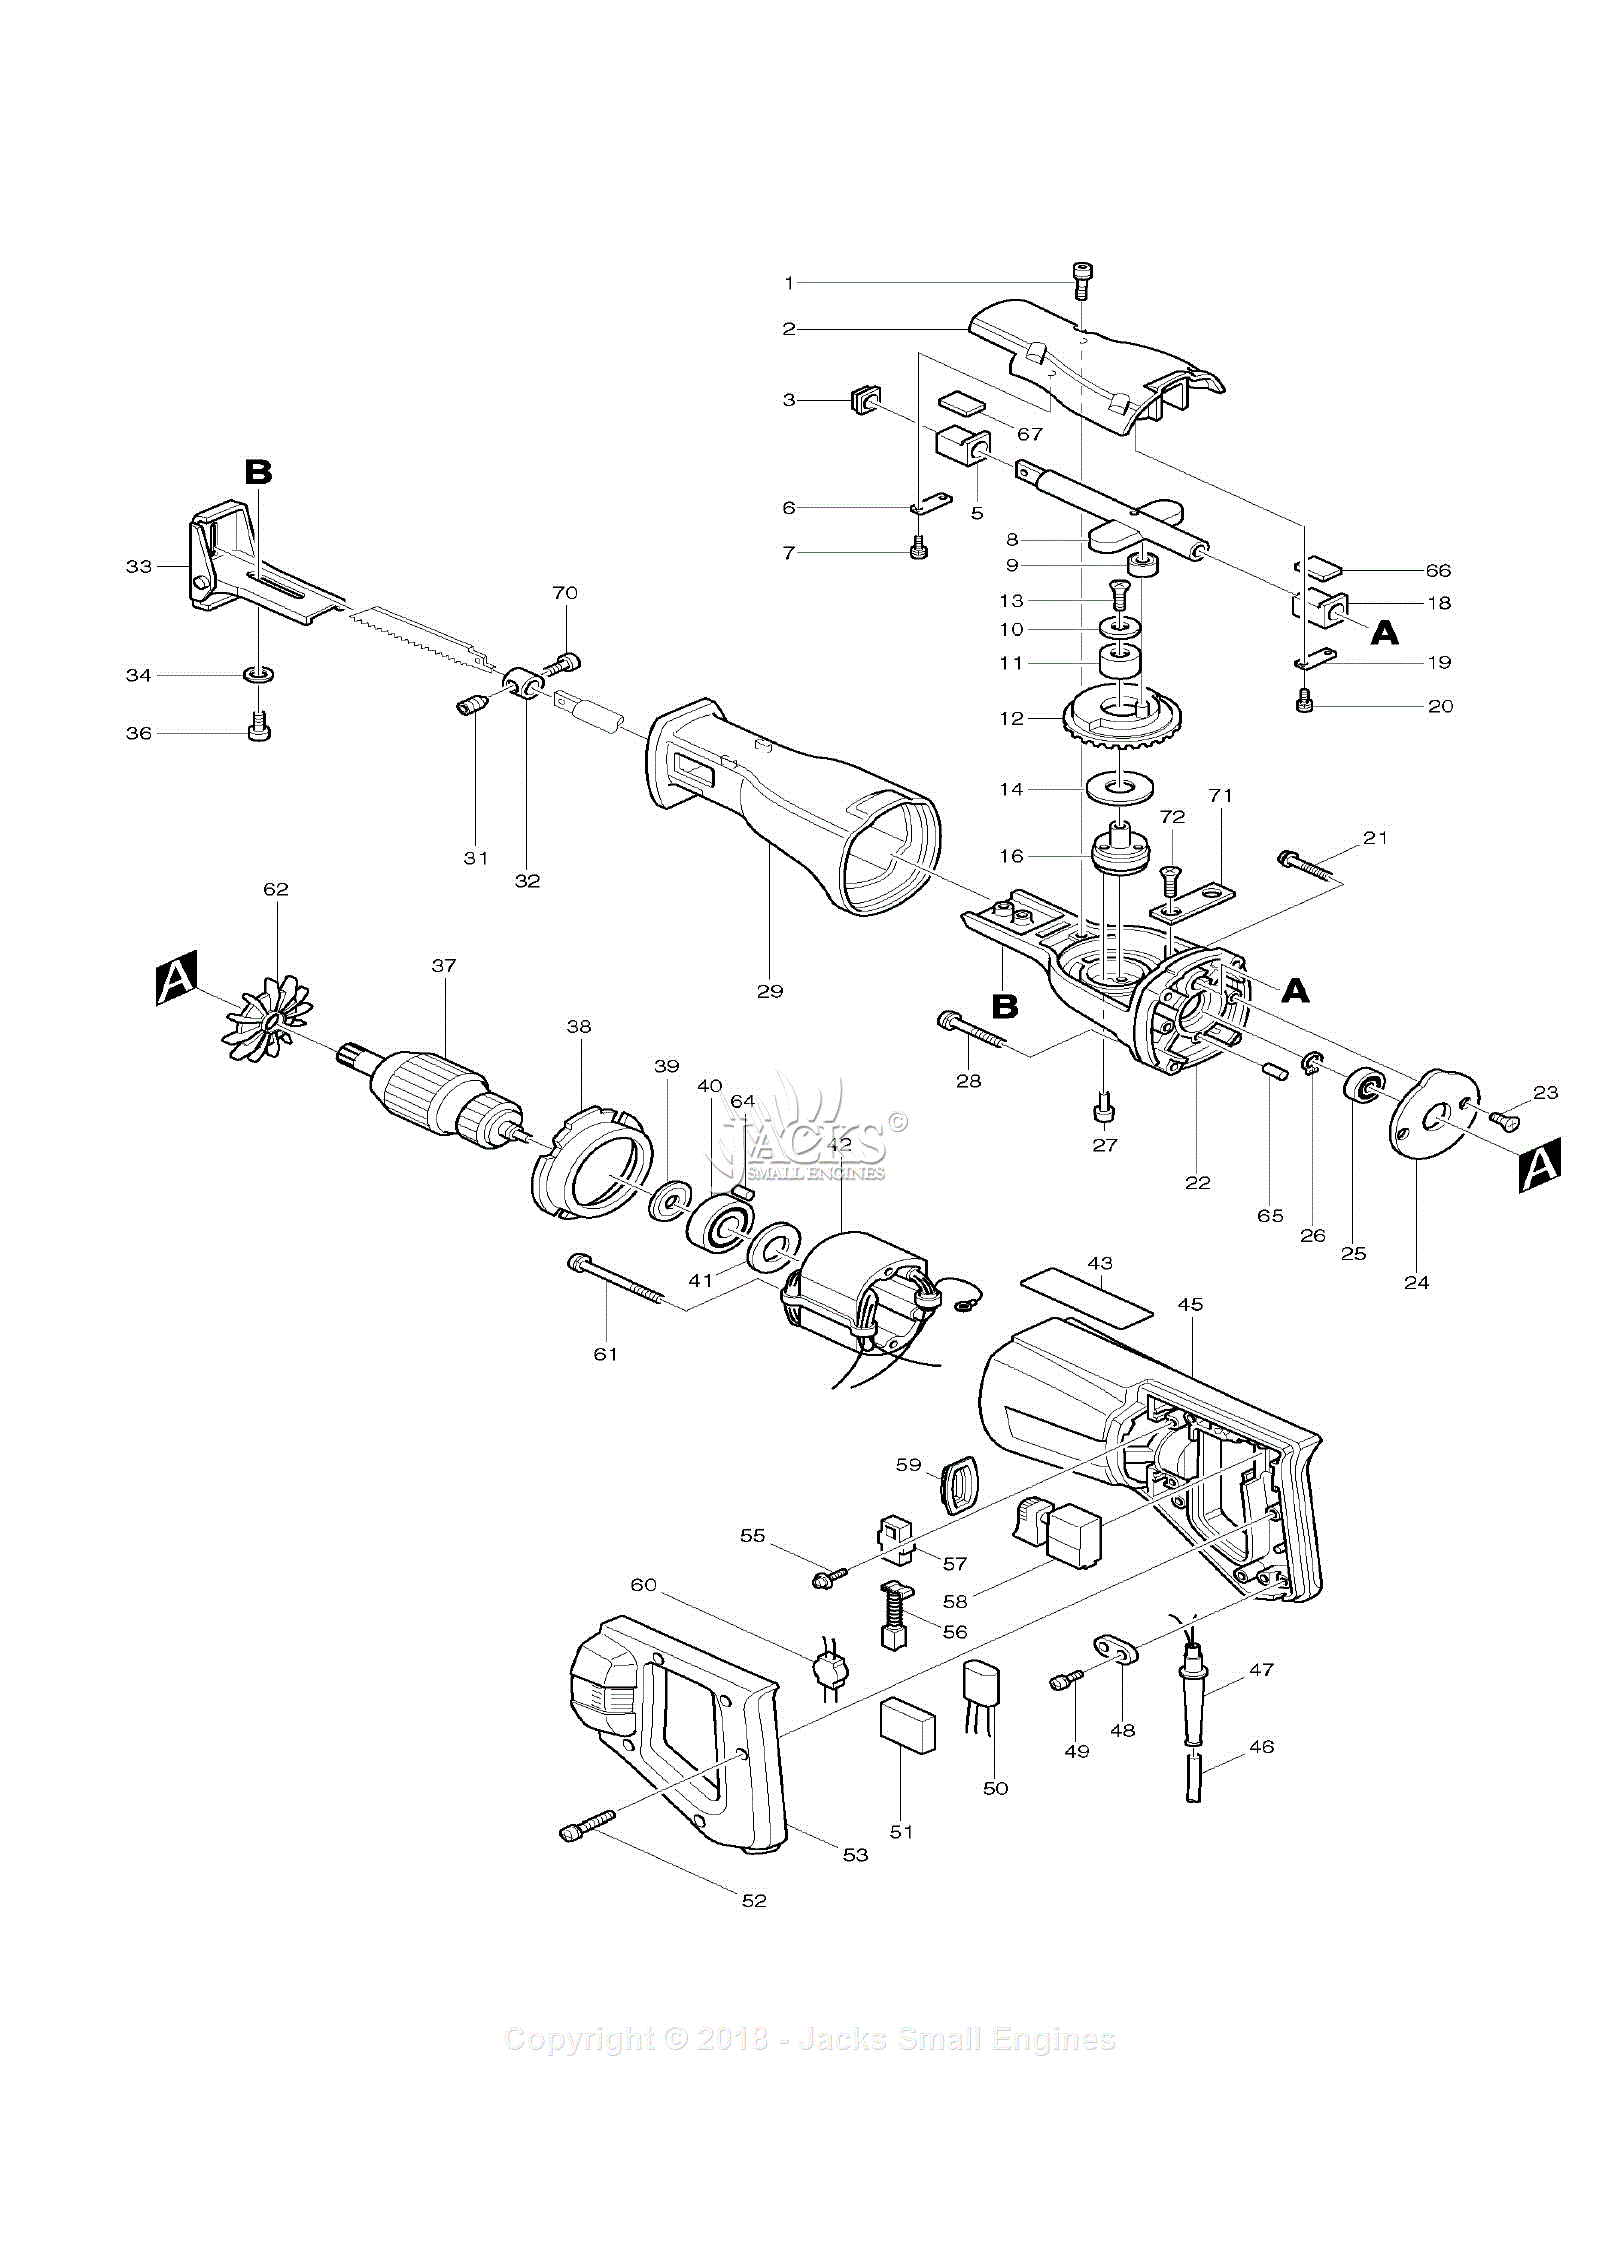 Dewalt Sawzall Parts Diagram - Wiring Diagram